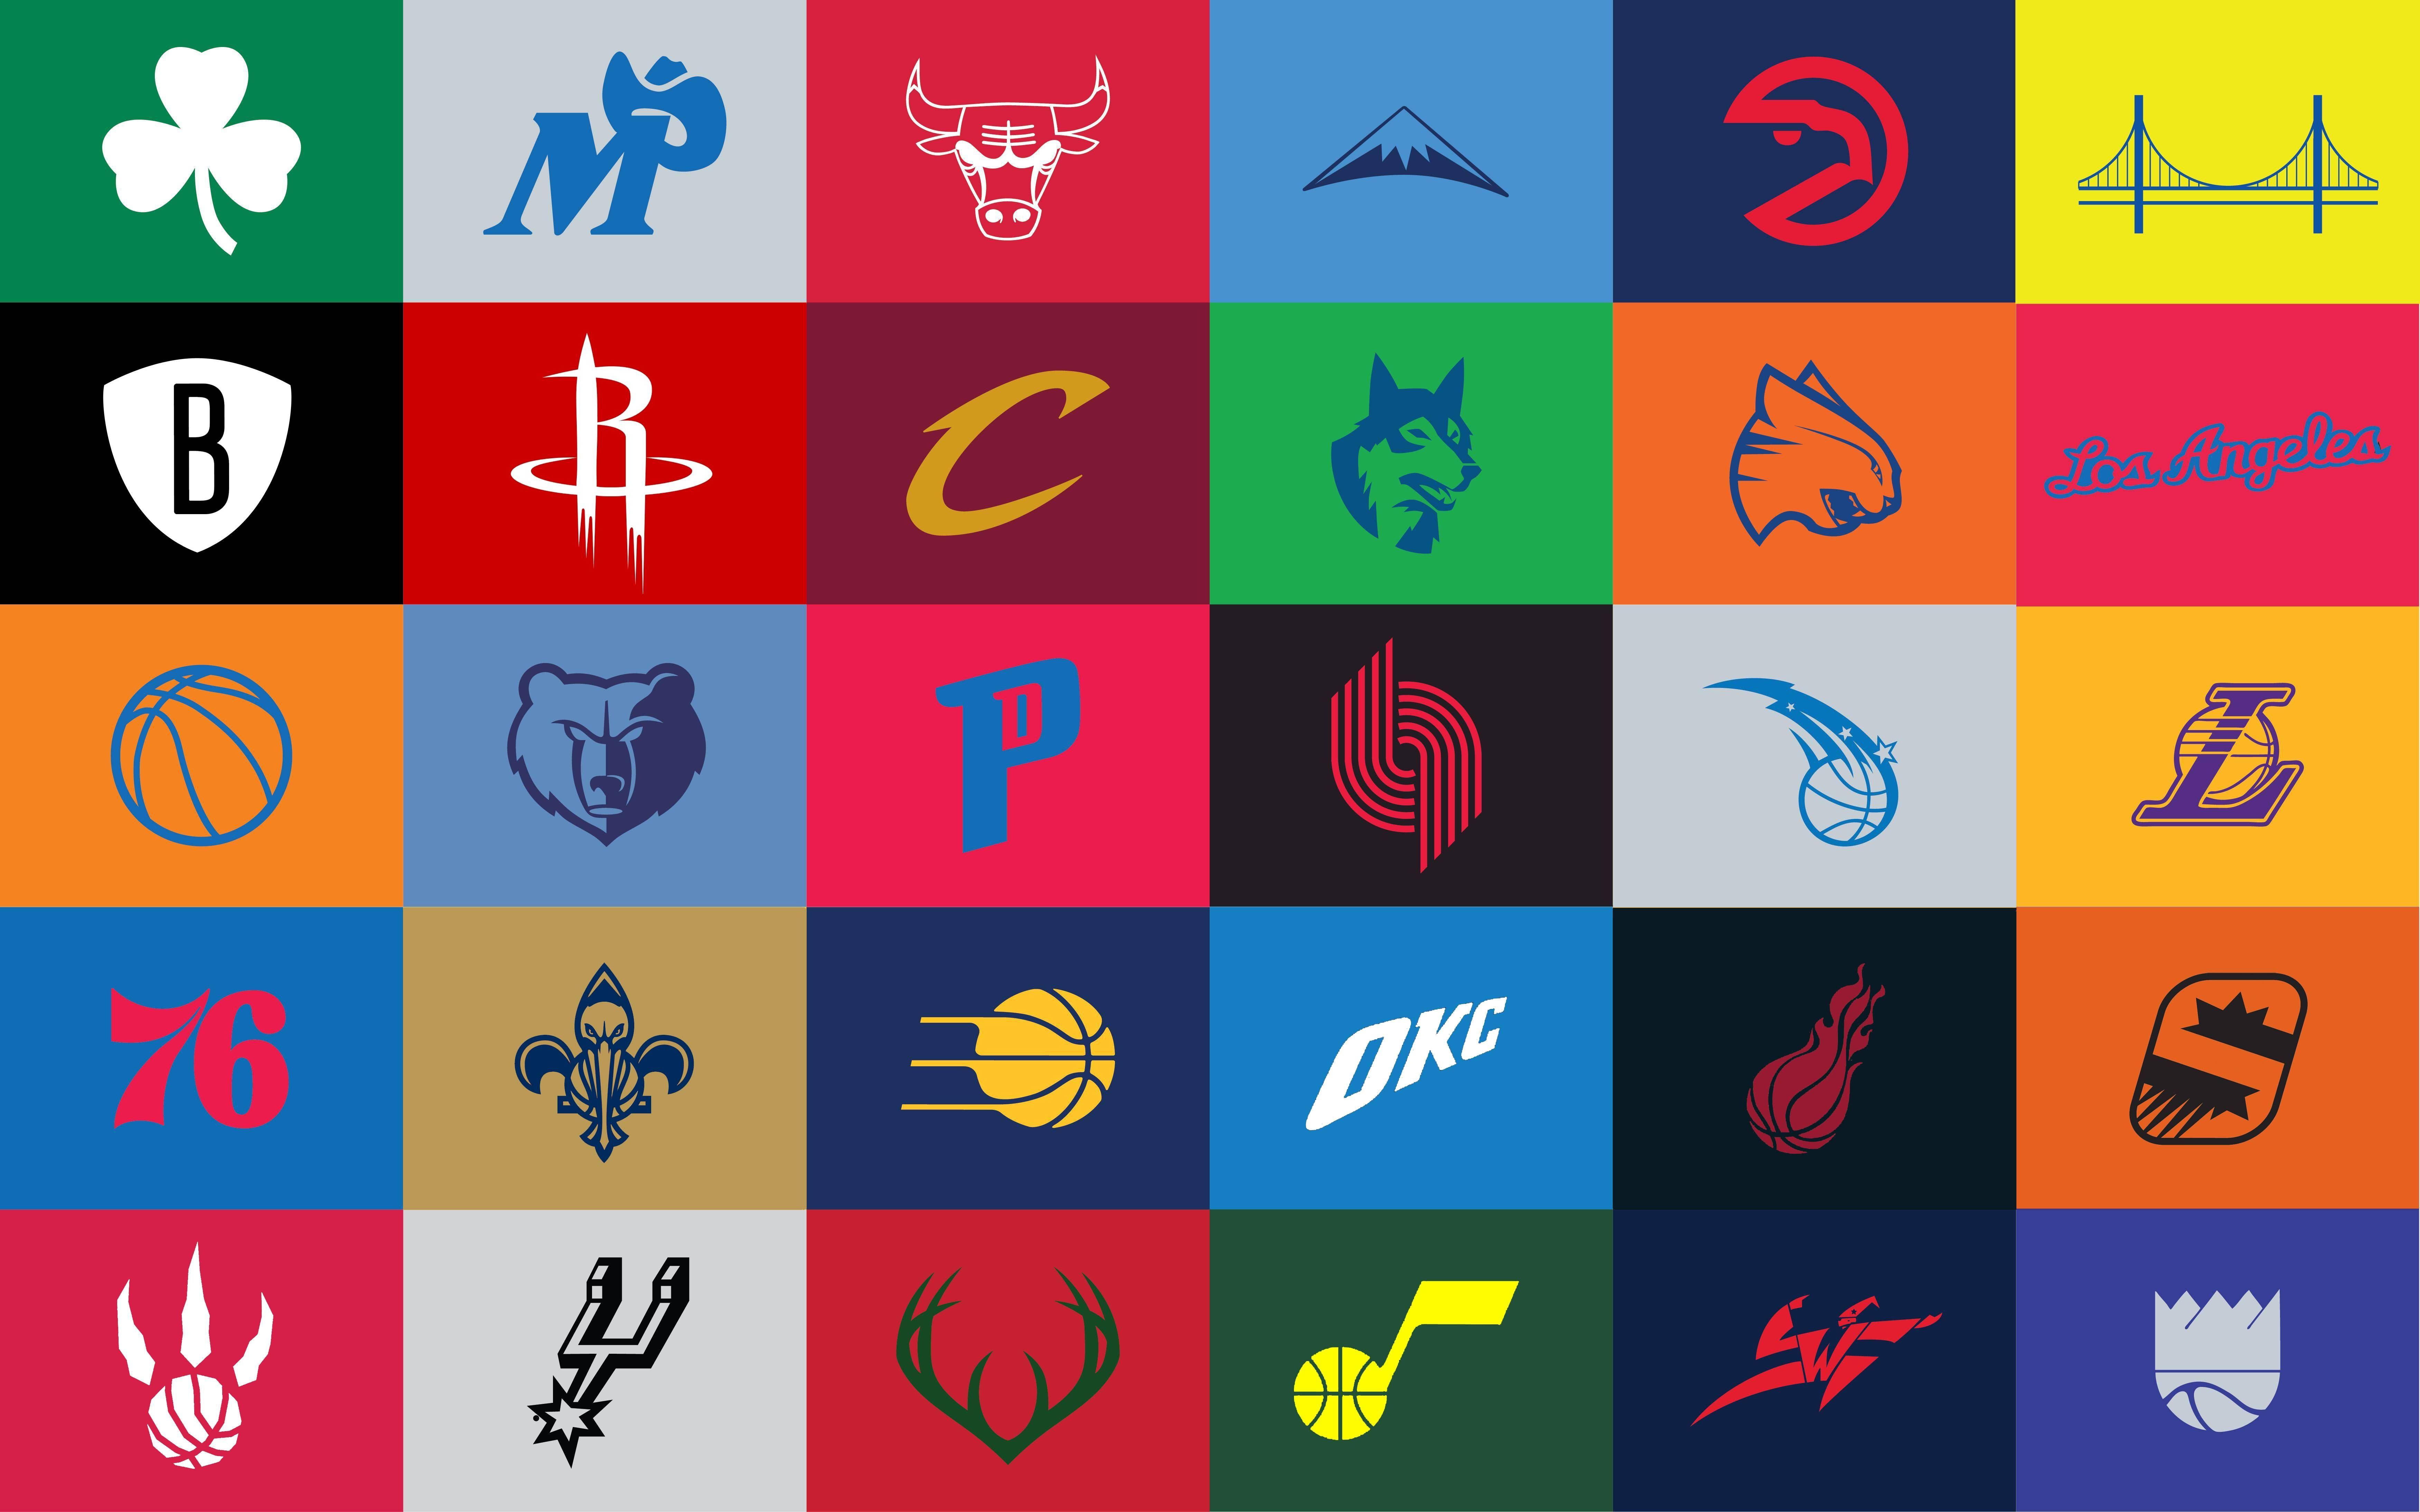 I made a few adjustments to the minimalist NBA logos